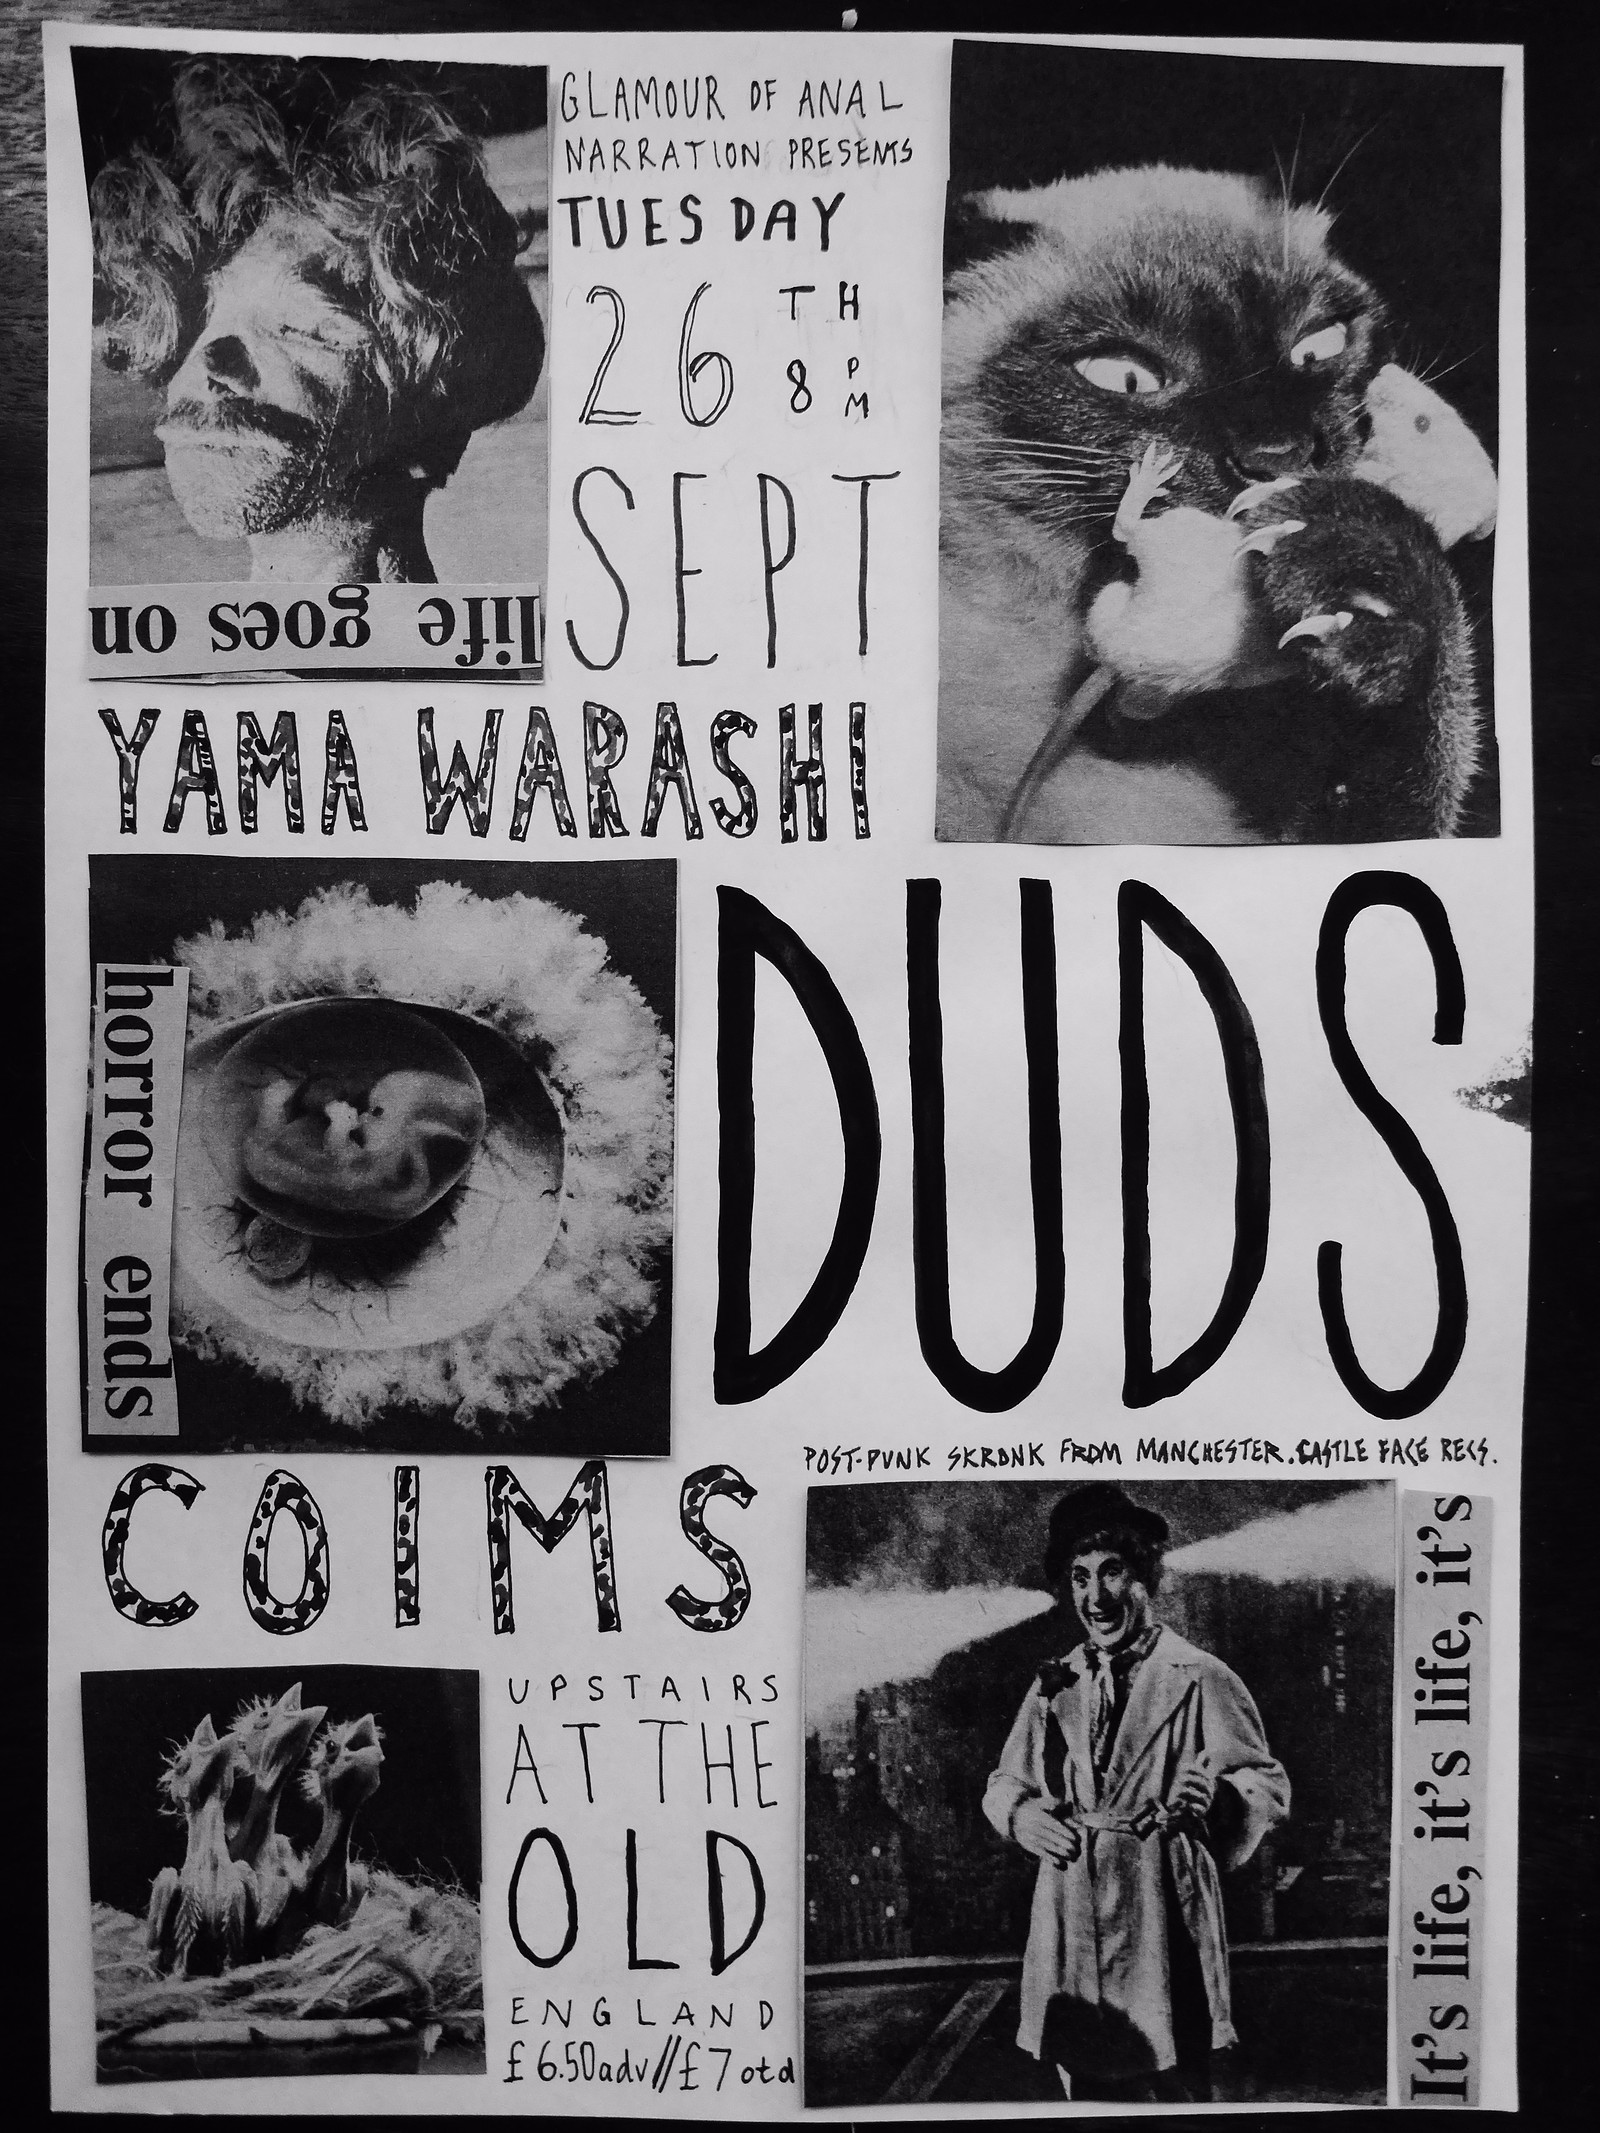 Duds, Yama Warashi + Coims at The Old England Pub